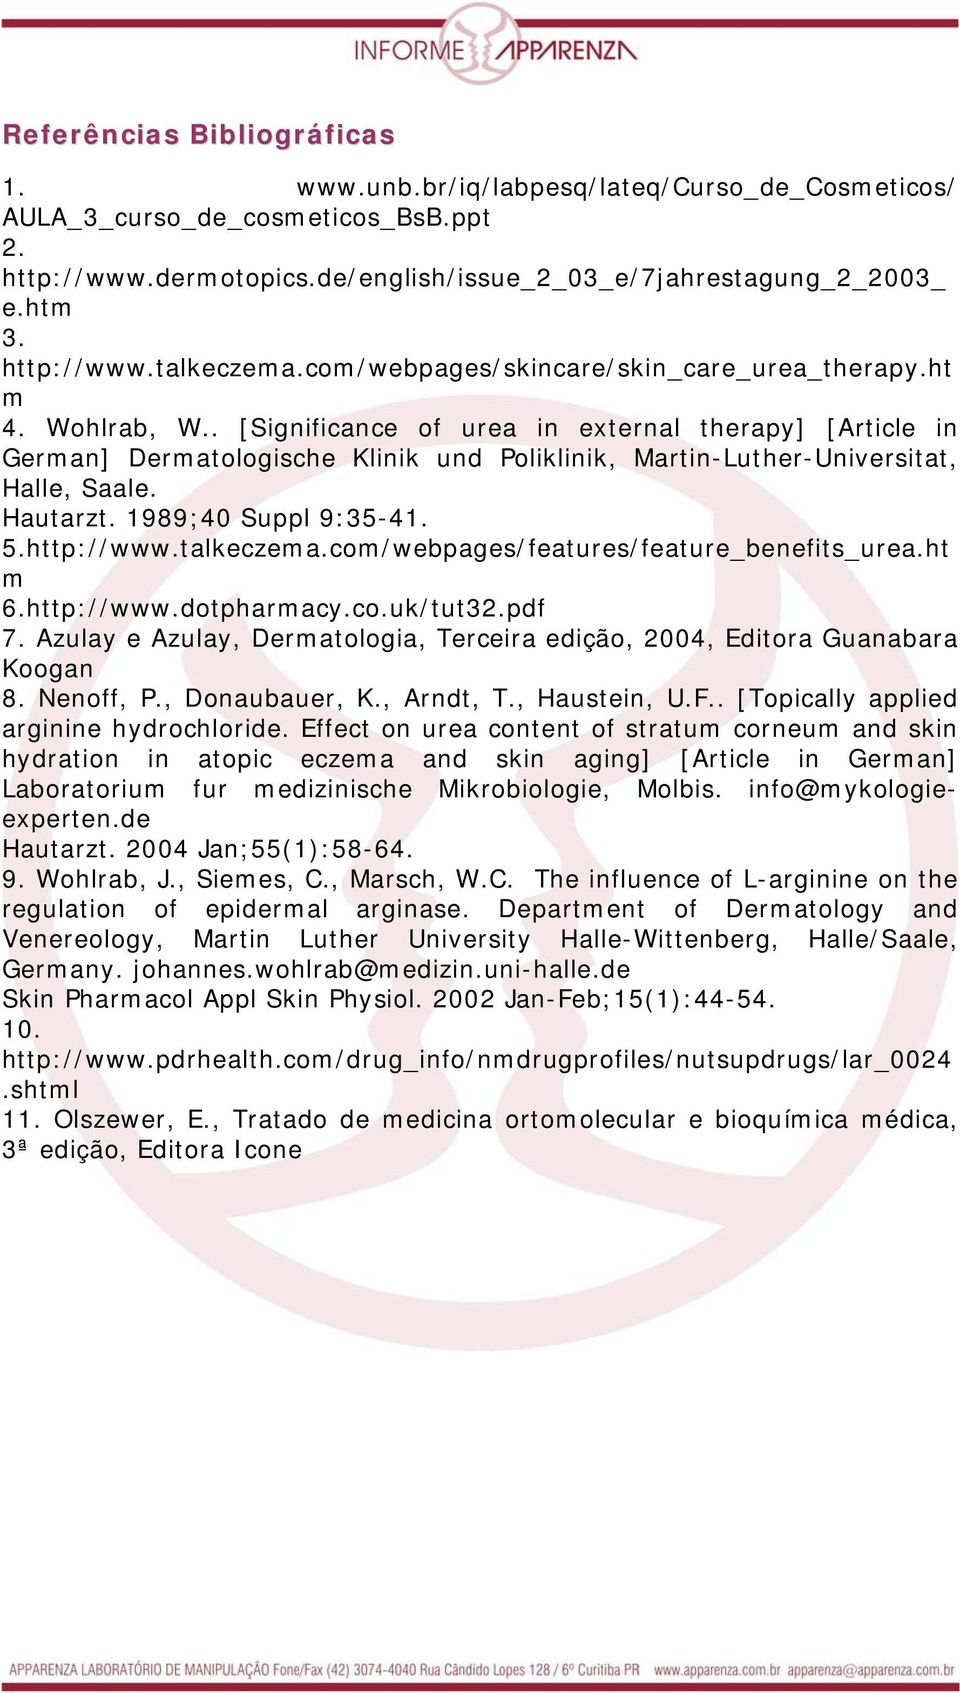 . [Significance of urea in external therapy] [Article in German] Dermatologische Klinik und Poliklinik, Martin-Luther-Universitat, Halle, Saale. Hautarzt. 1989;40 Suppl 9:35-41. 5.http://www.